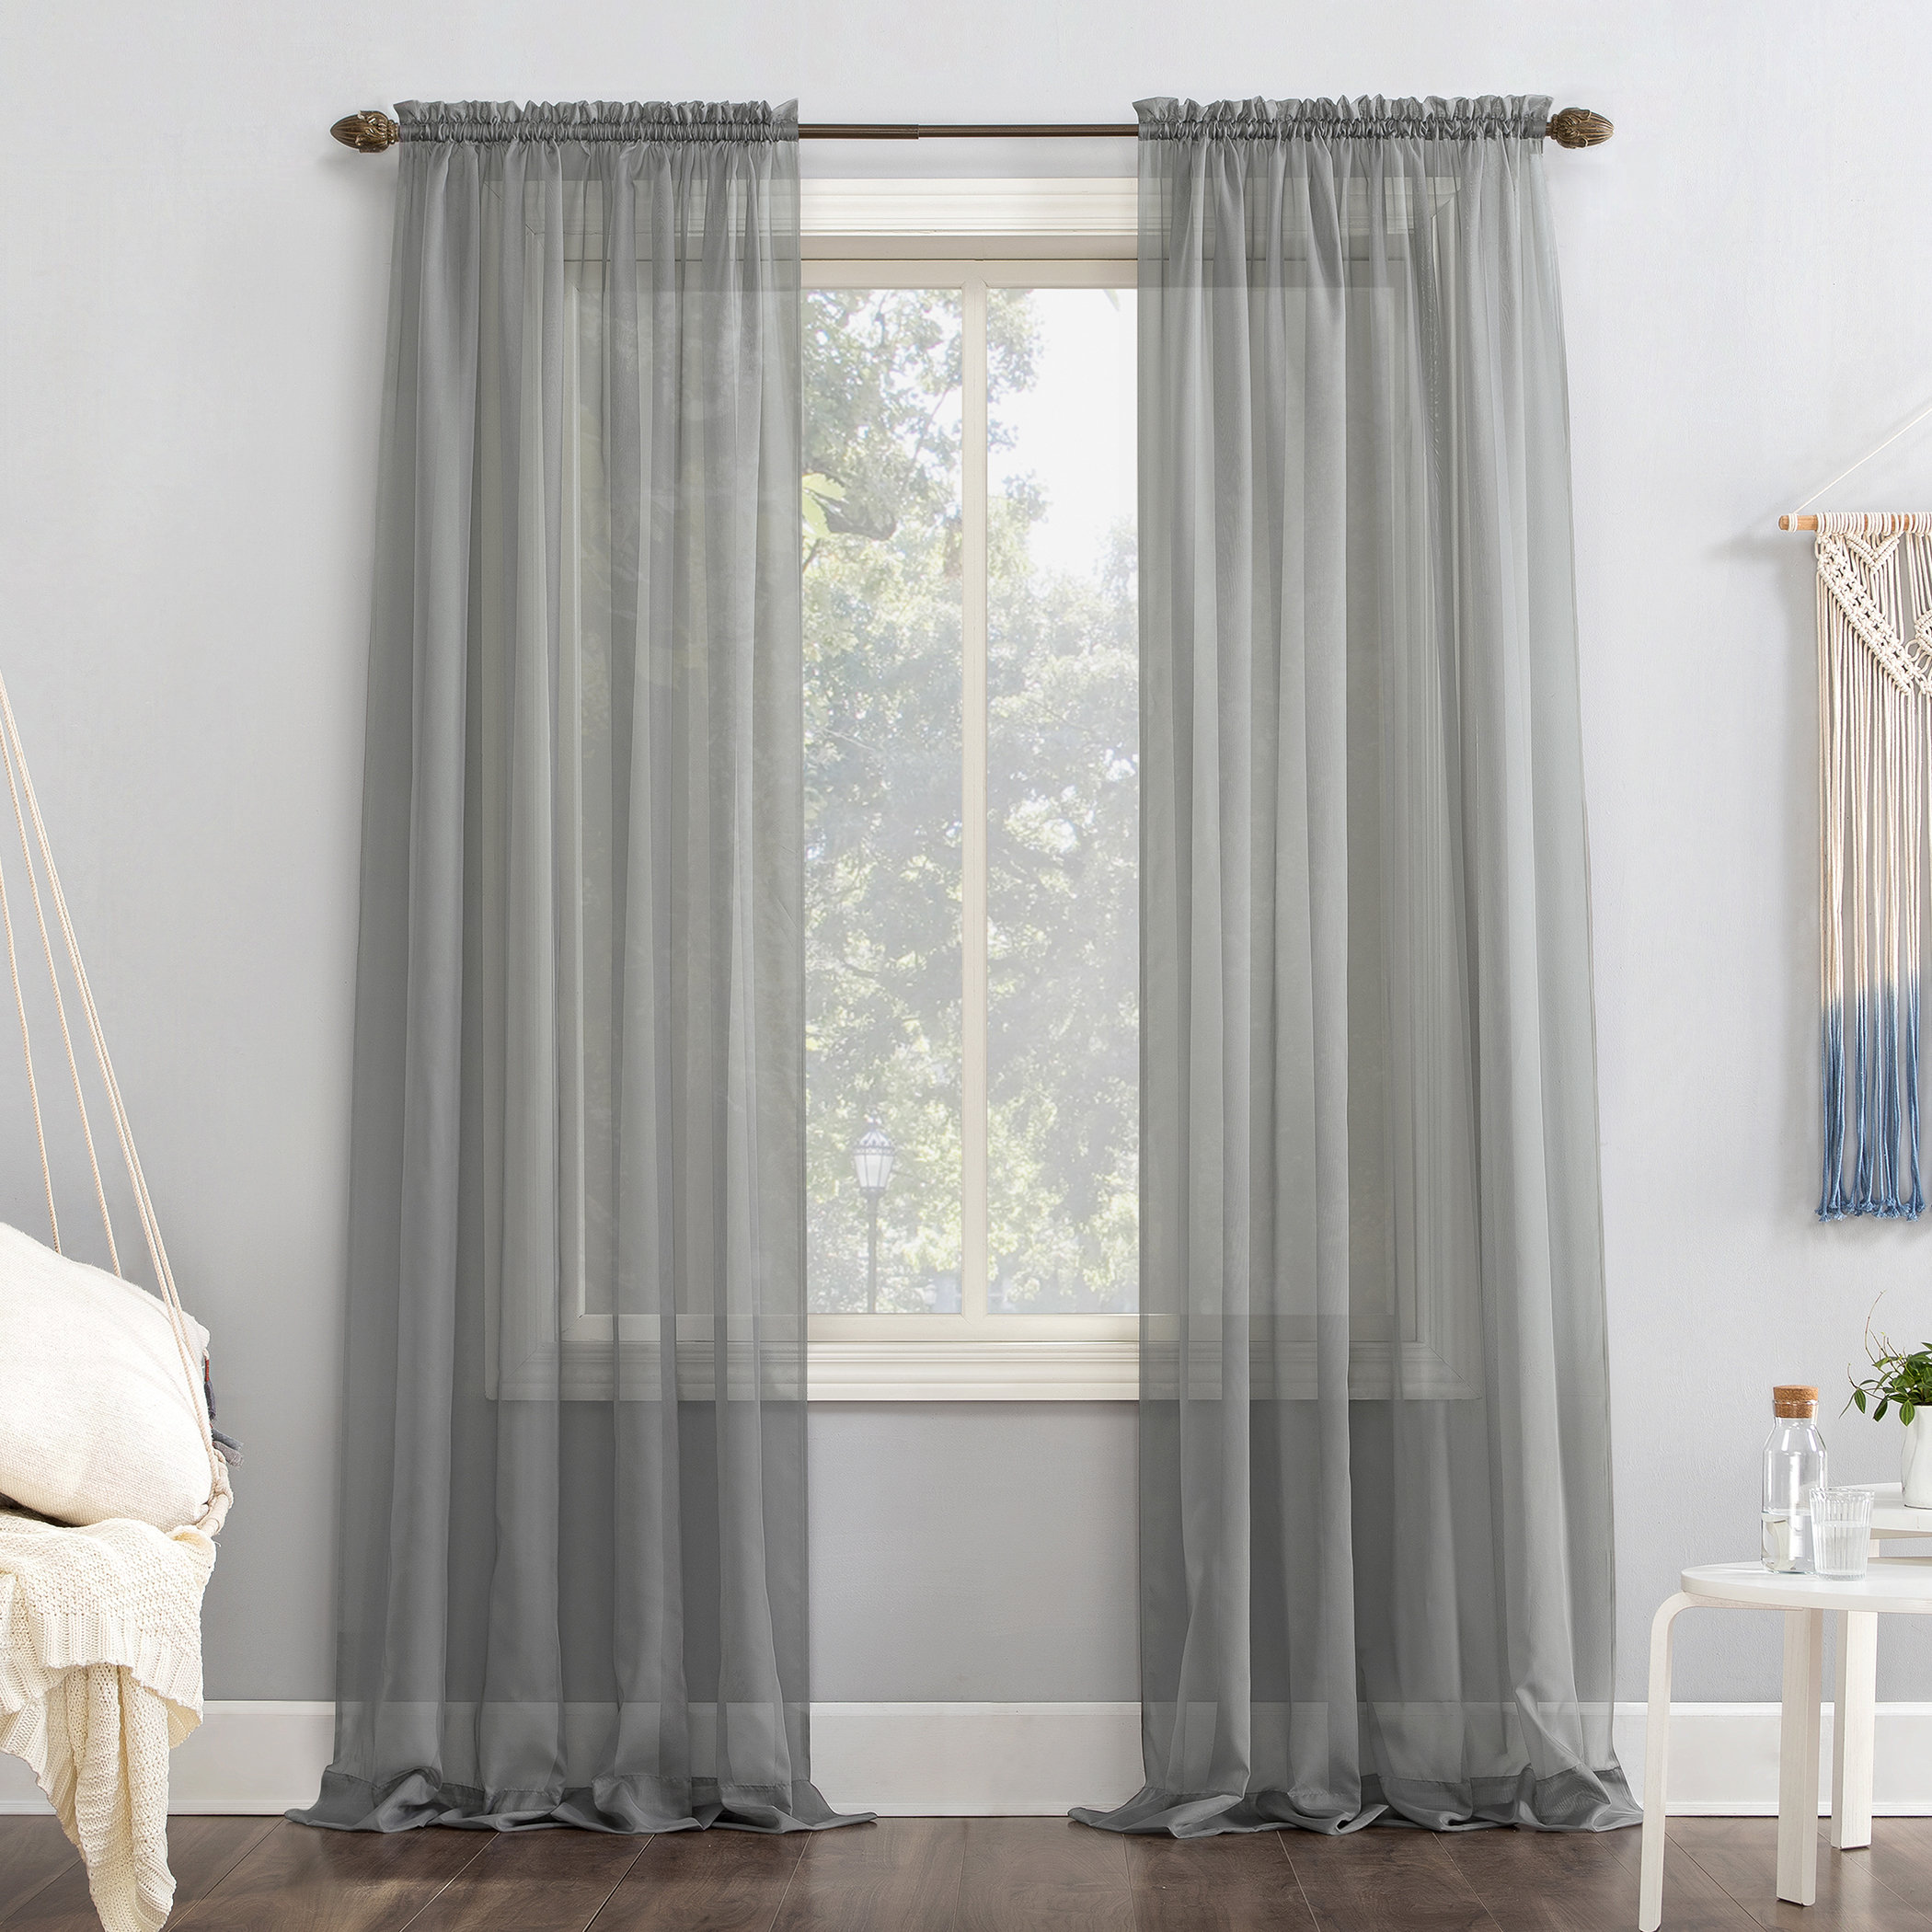 Wayfair | 108 Inch Curtains & Drapes